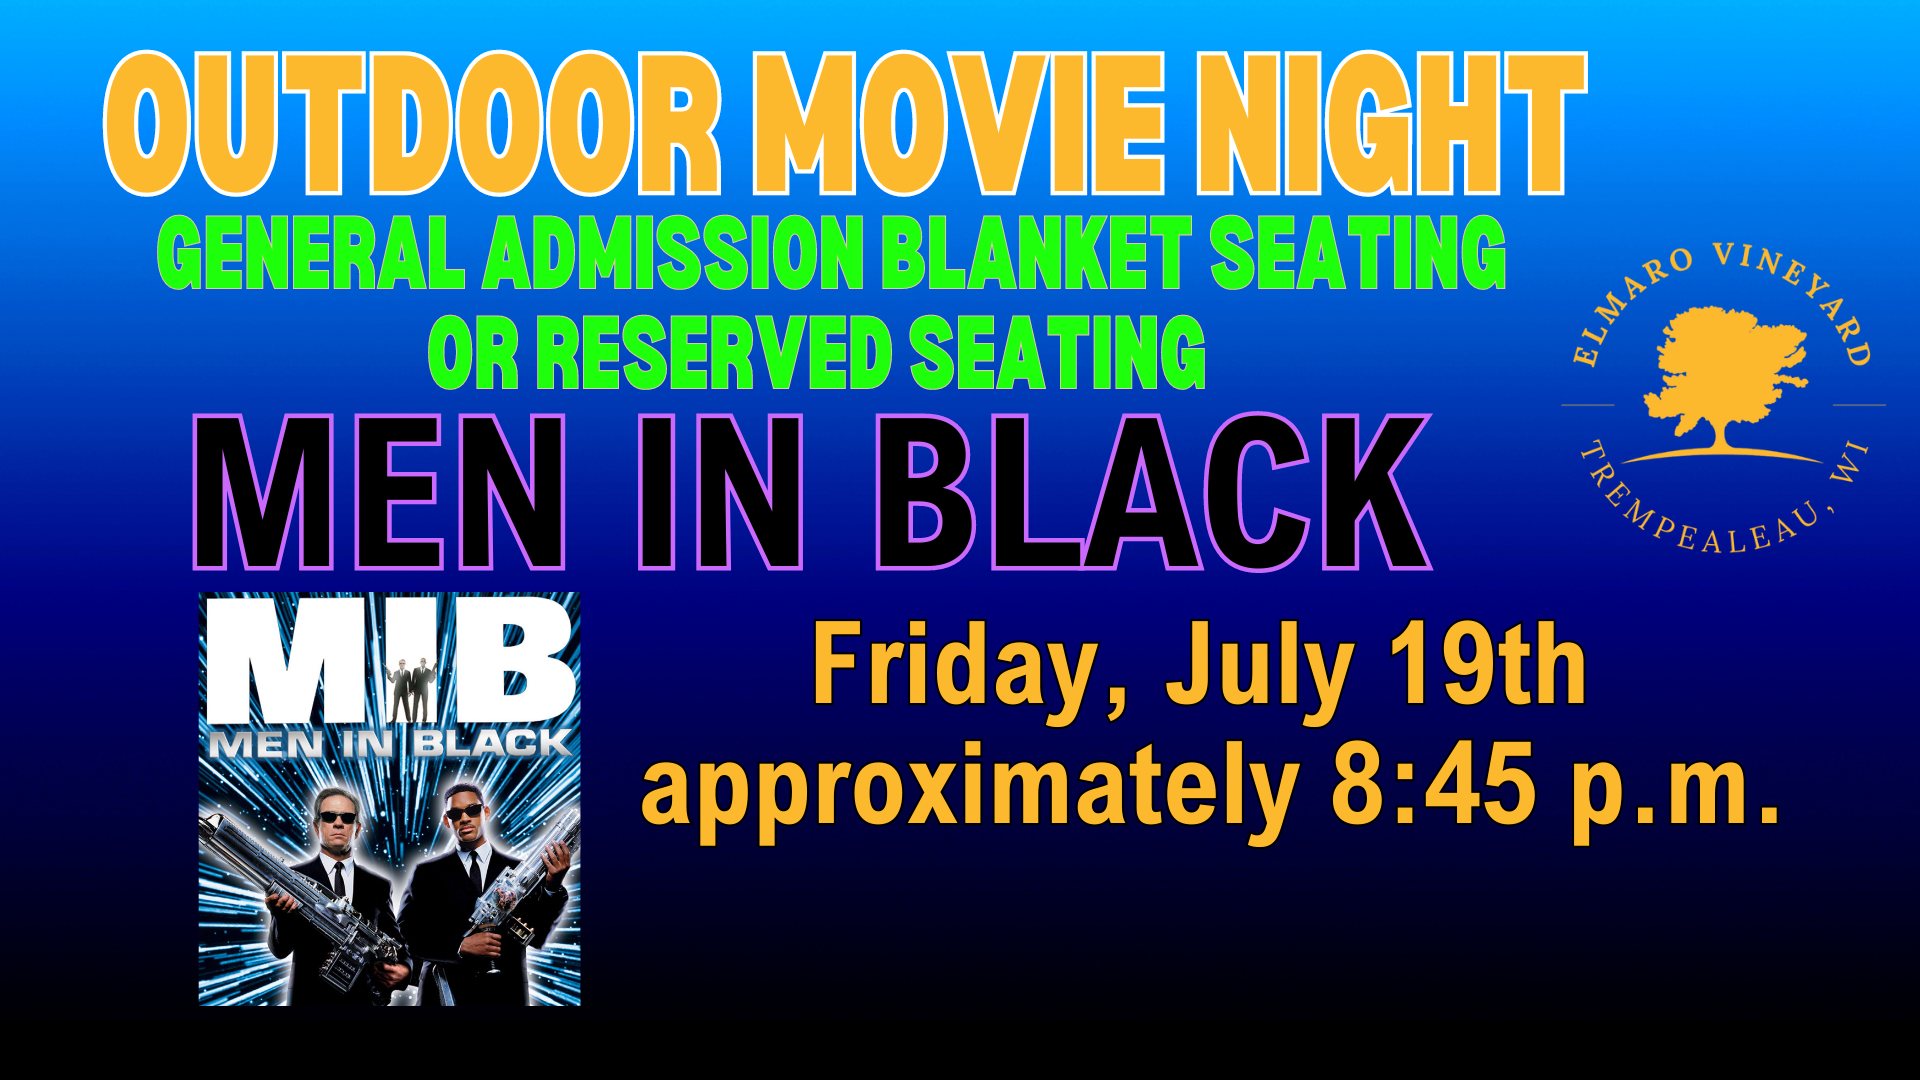 Men in Black movie night, July 19th.